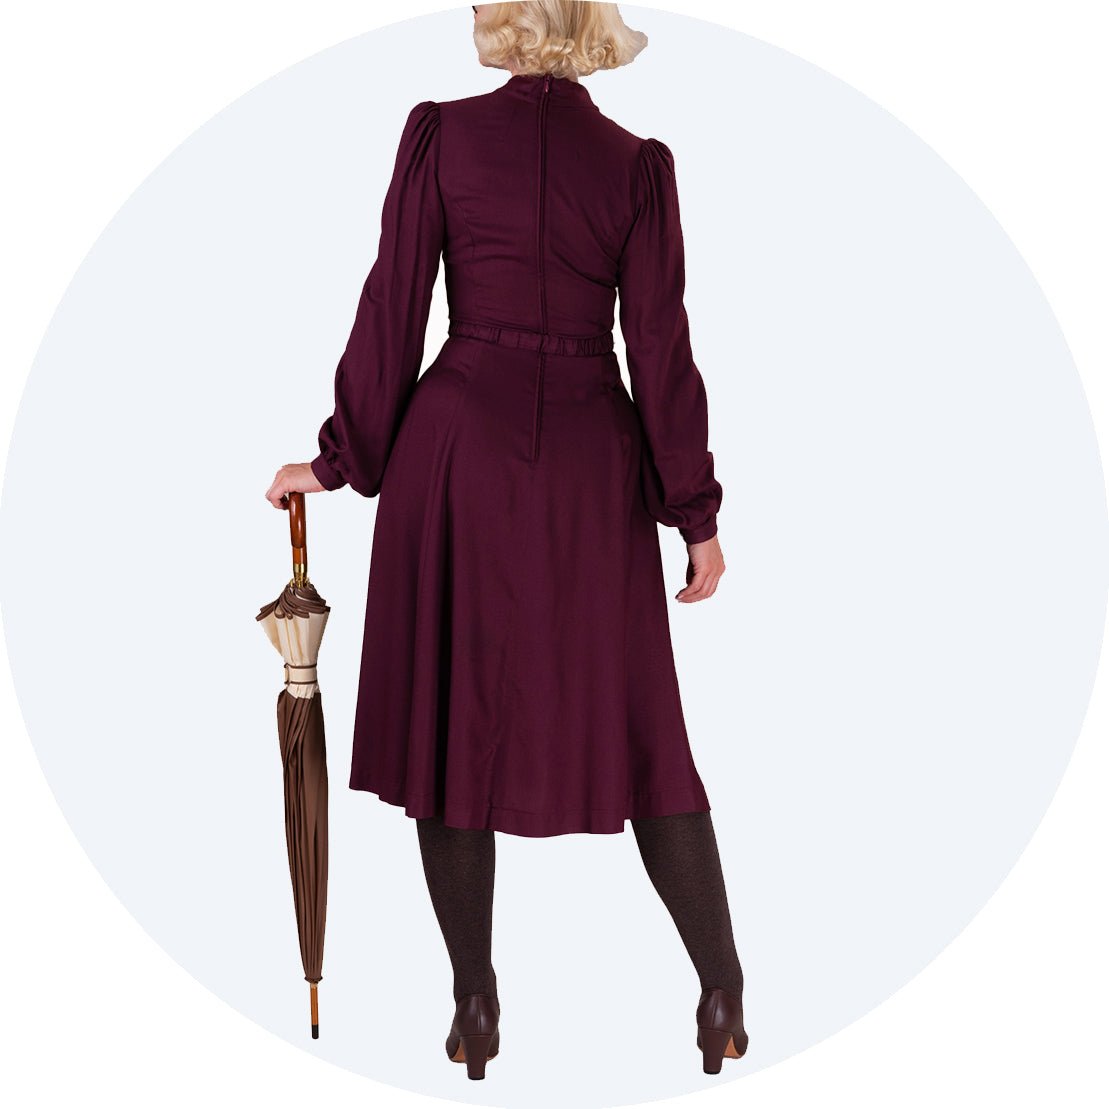 Long sleeved vintage inspired dress - Midwinter Midi Dress by Emmy Design Sweden in aubergine